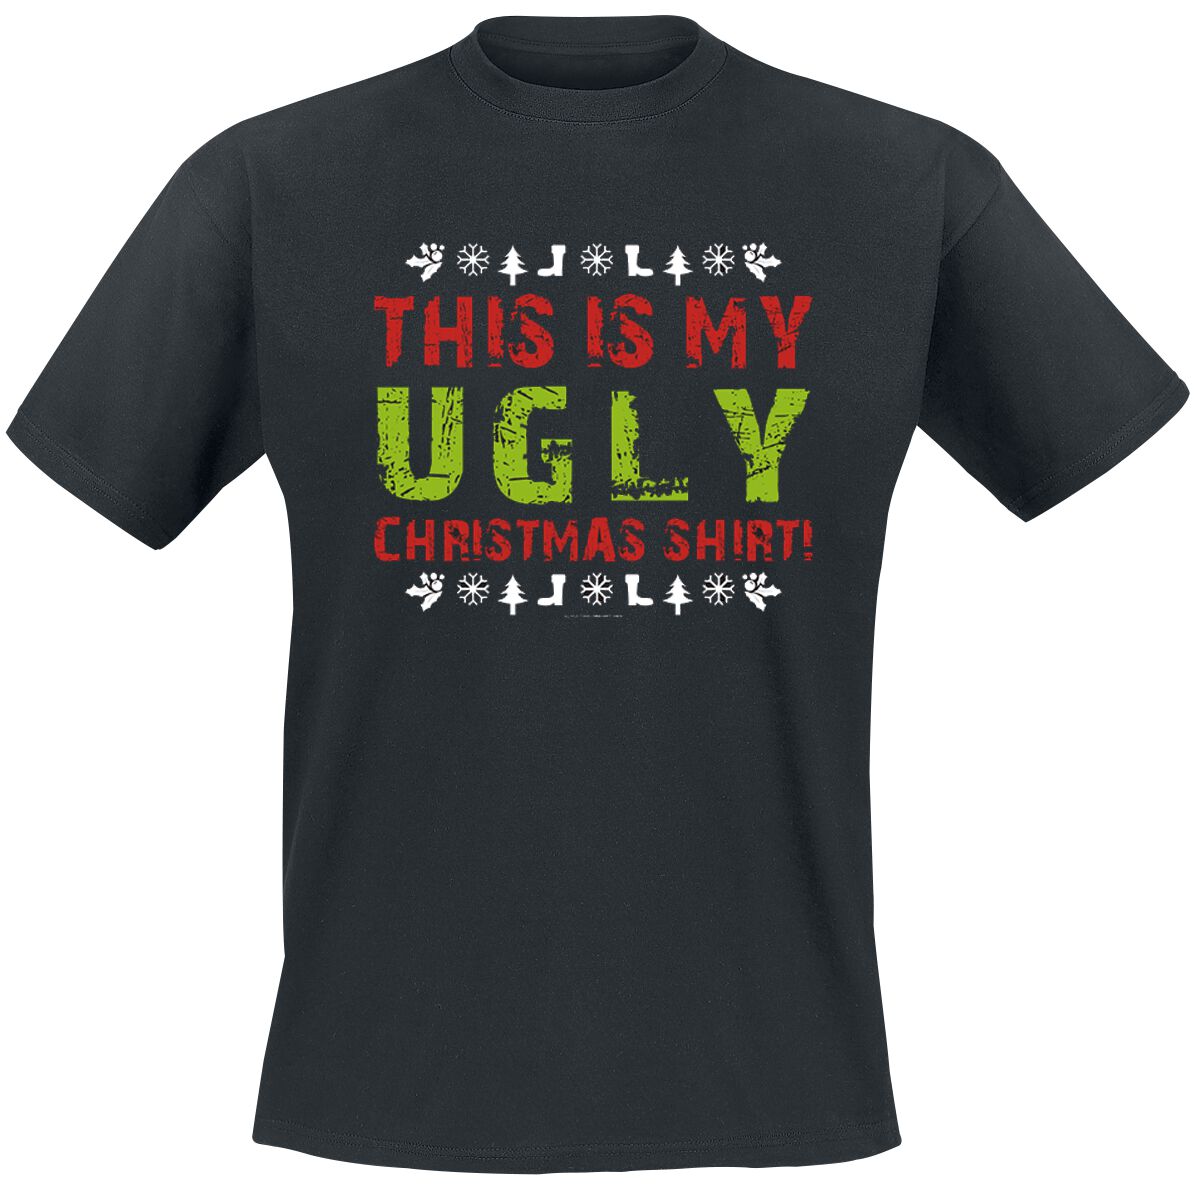 Slogans This Is My Ugly Christmas Shirt! T-Shirt black